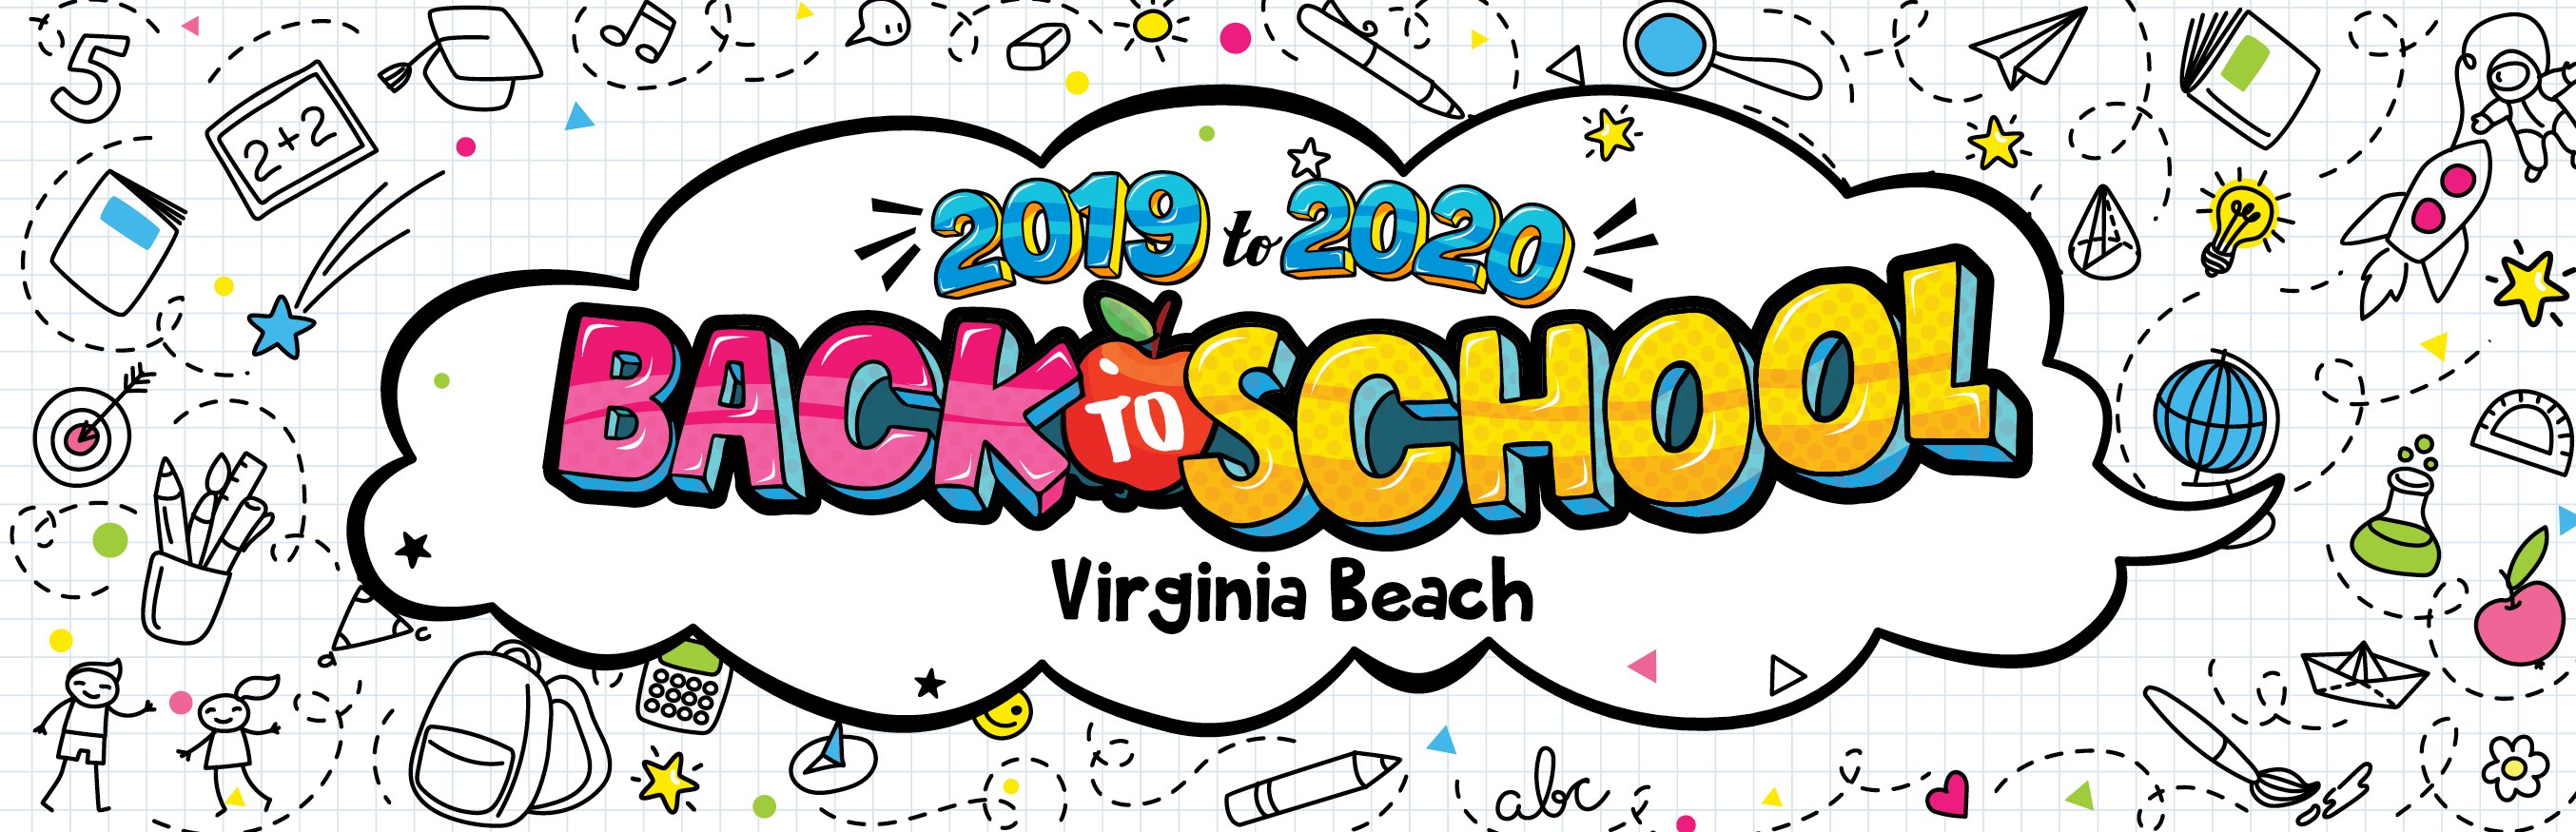 2019-2020 School Calendar - Virginia Beach